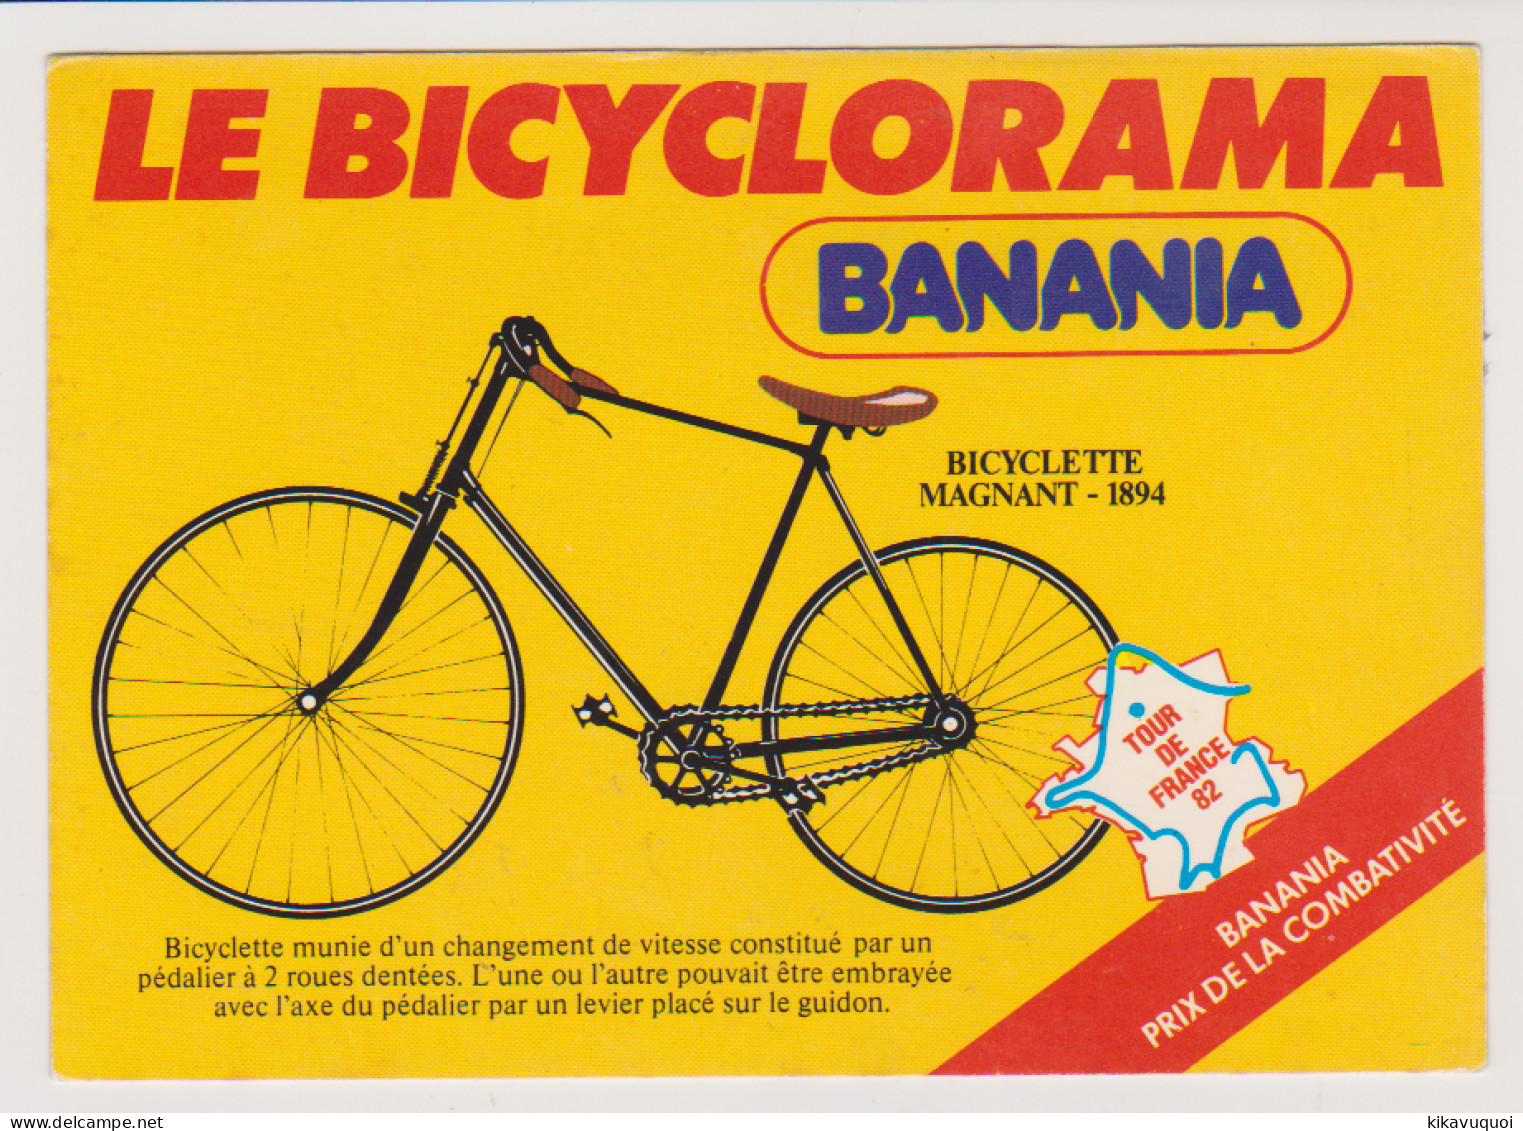 BANANIA - TOUR DE FRANCE 1982 - LE BICYCLORAMA - VELO - CYCLE - CARTE POSTALE ANCIENNE - Motorräder